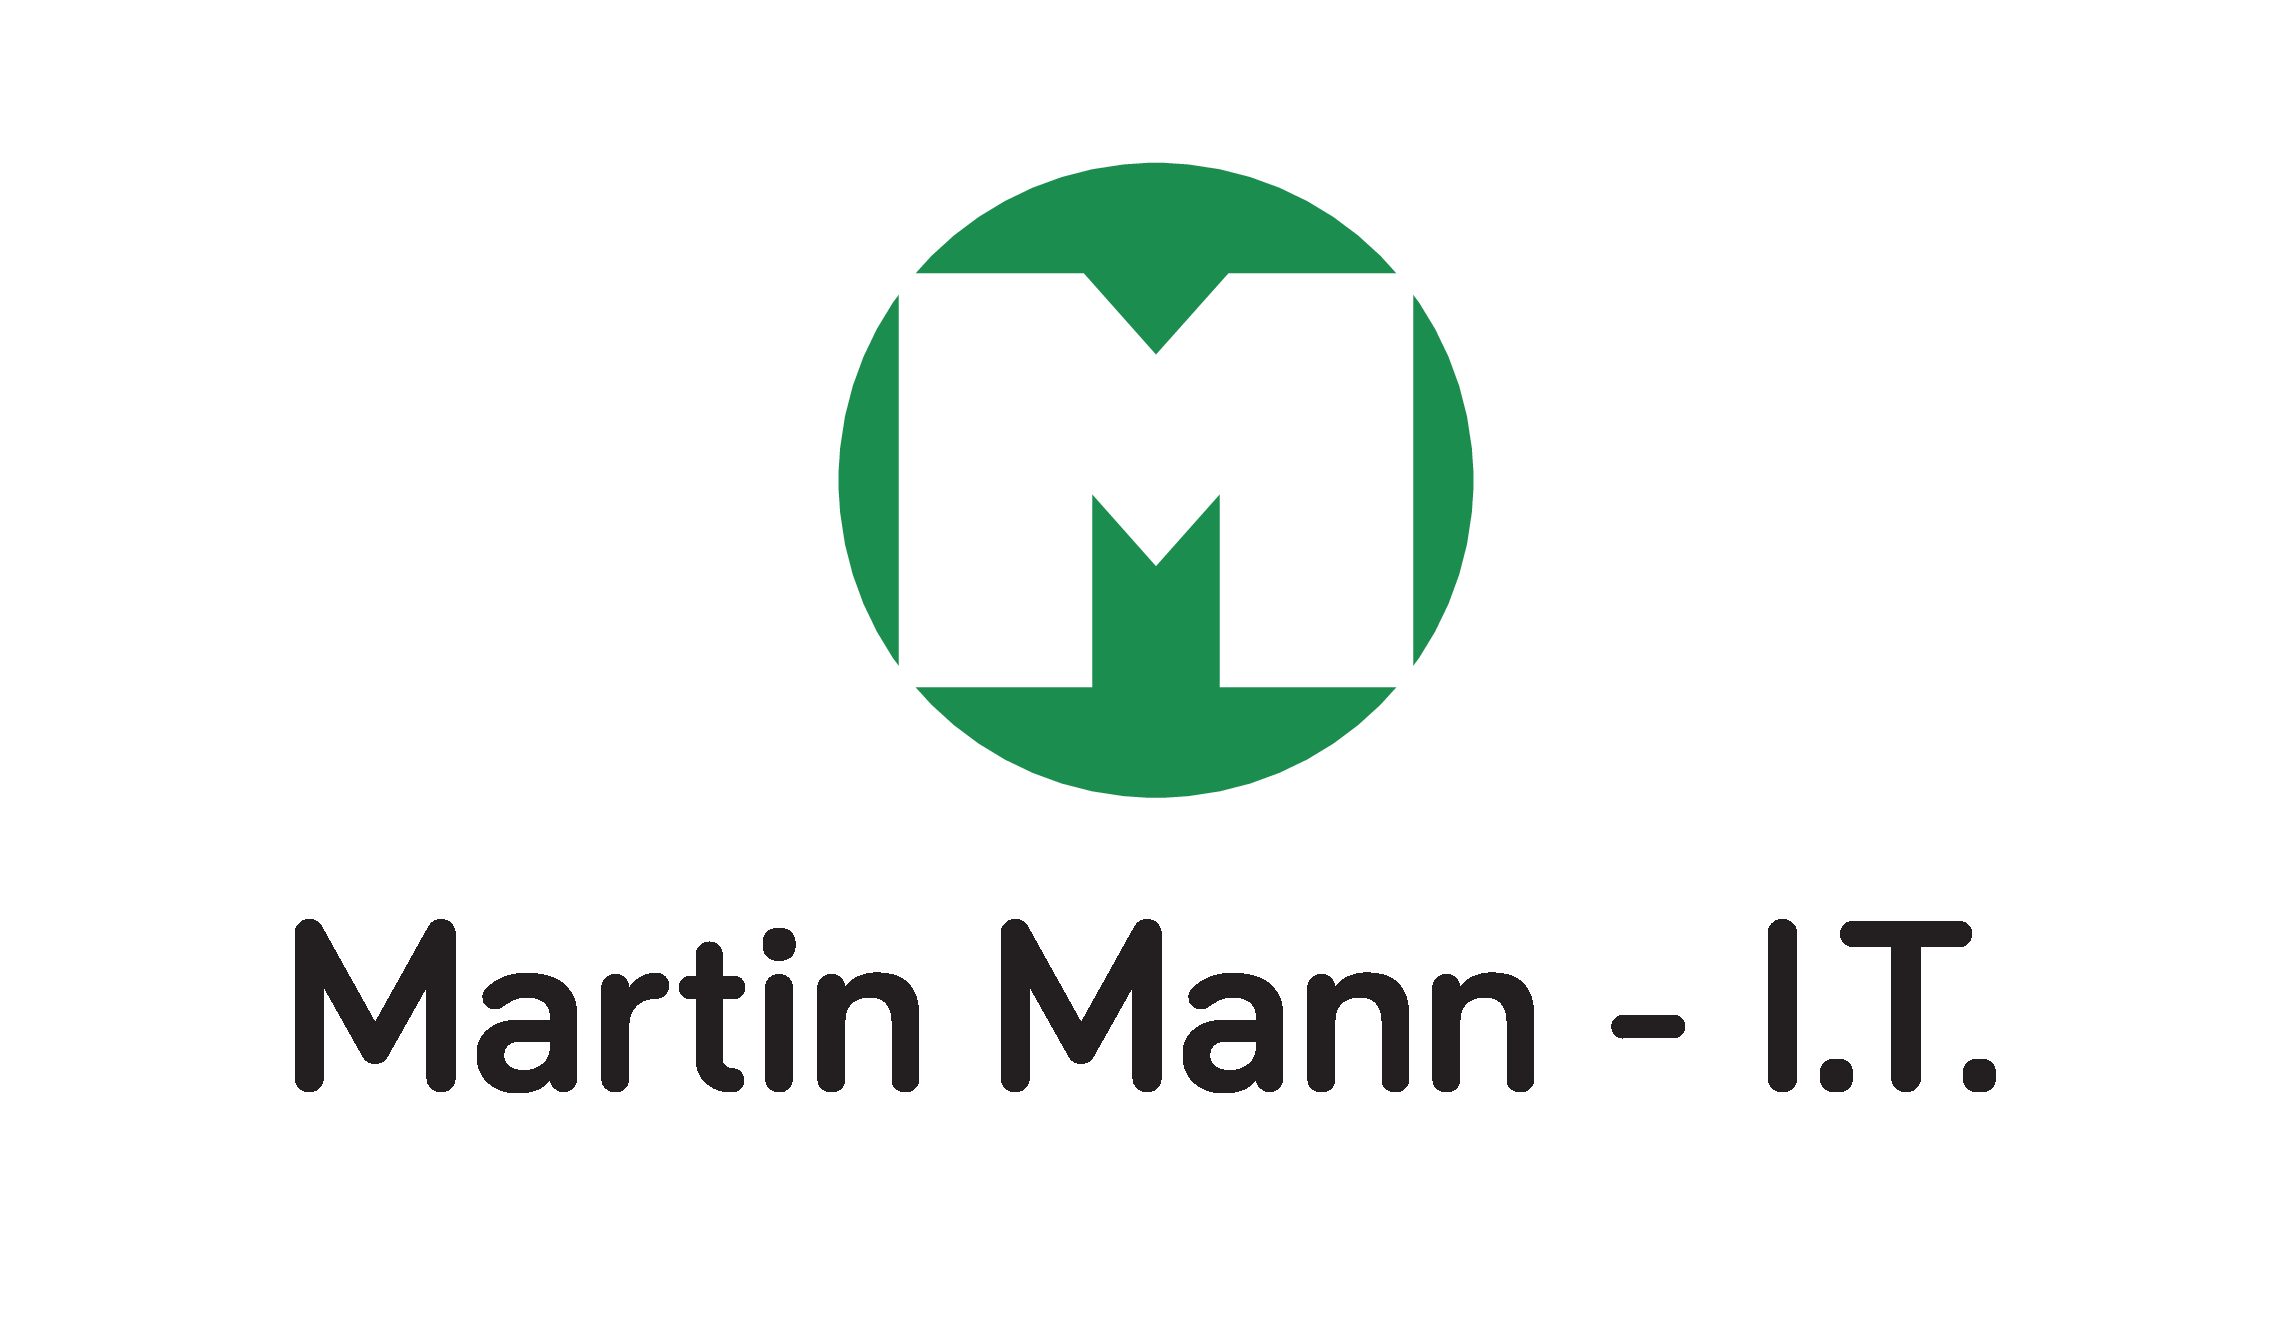 Martin Mann IT Solutions is a corporate friend of Harrogate International Festivals